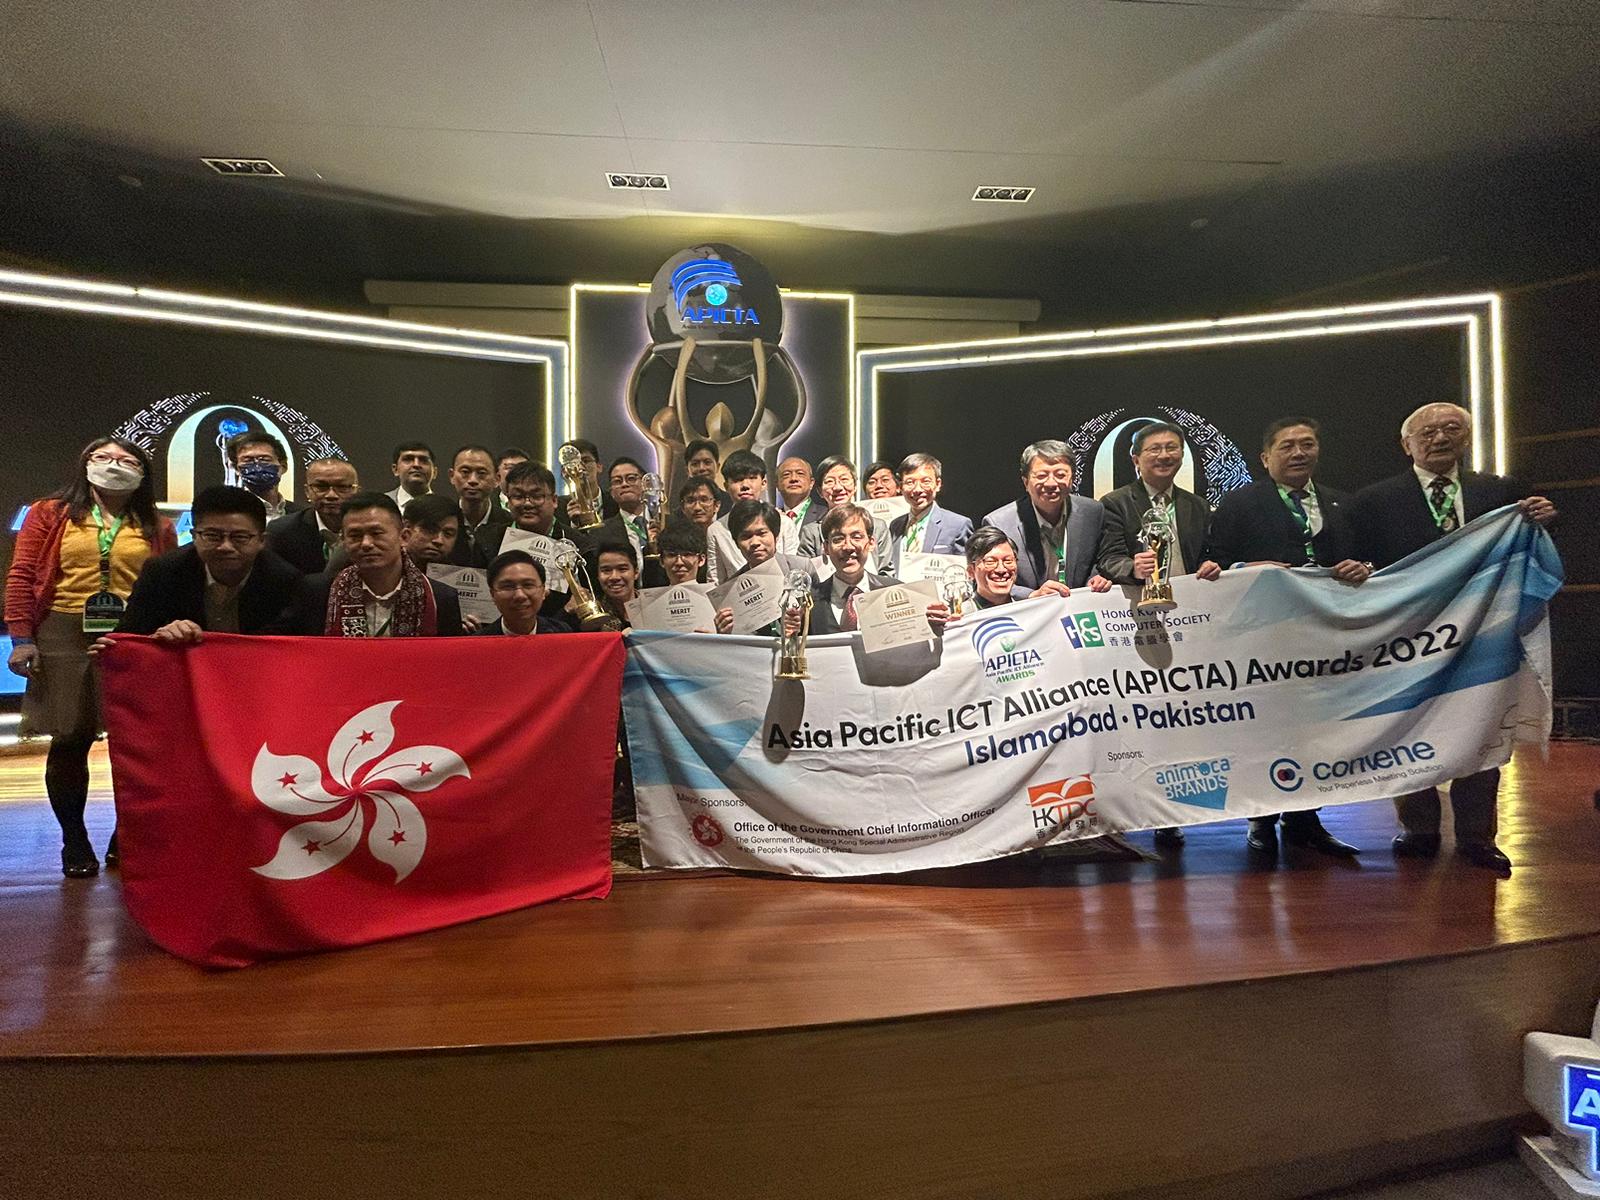 Group photo of the Hong Kong delegation taken after the presentation ceremony held on 11 December 2022.